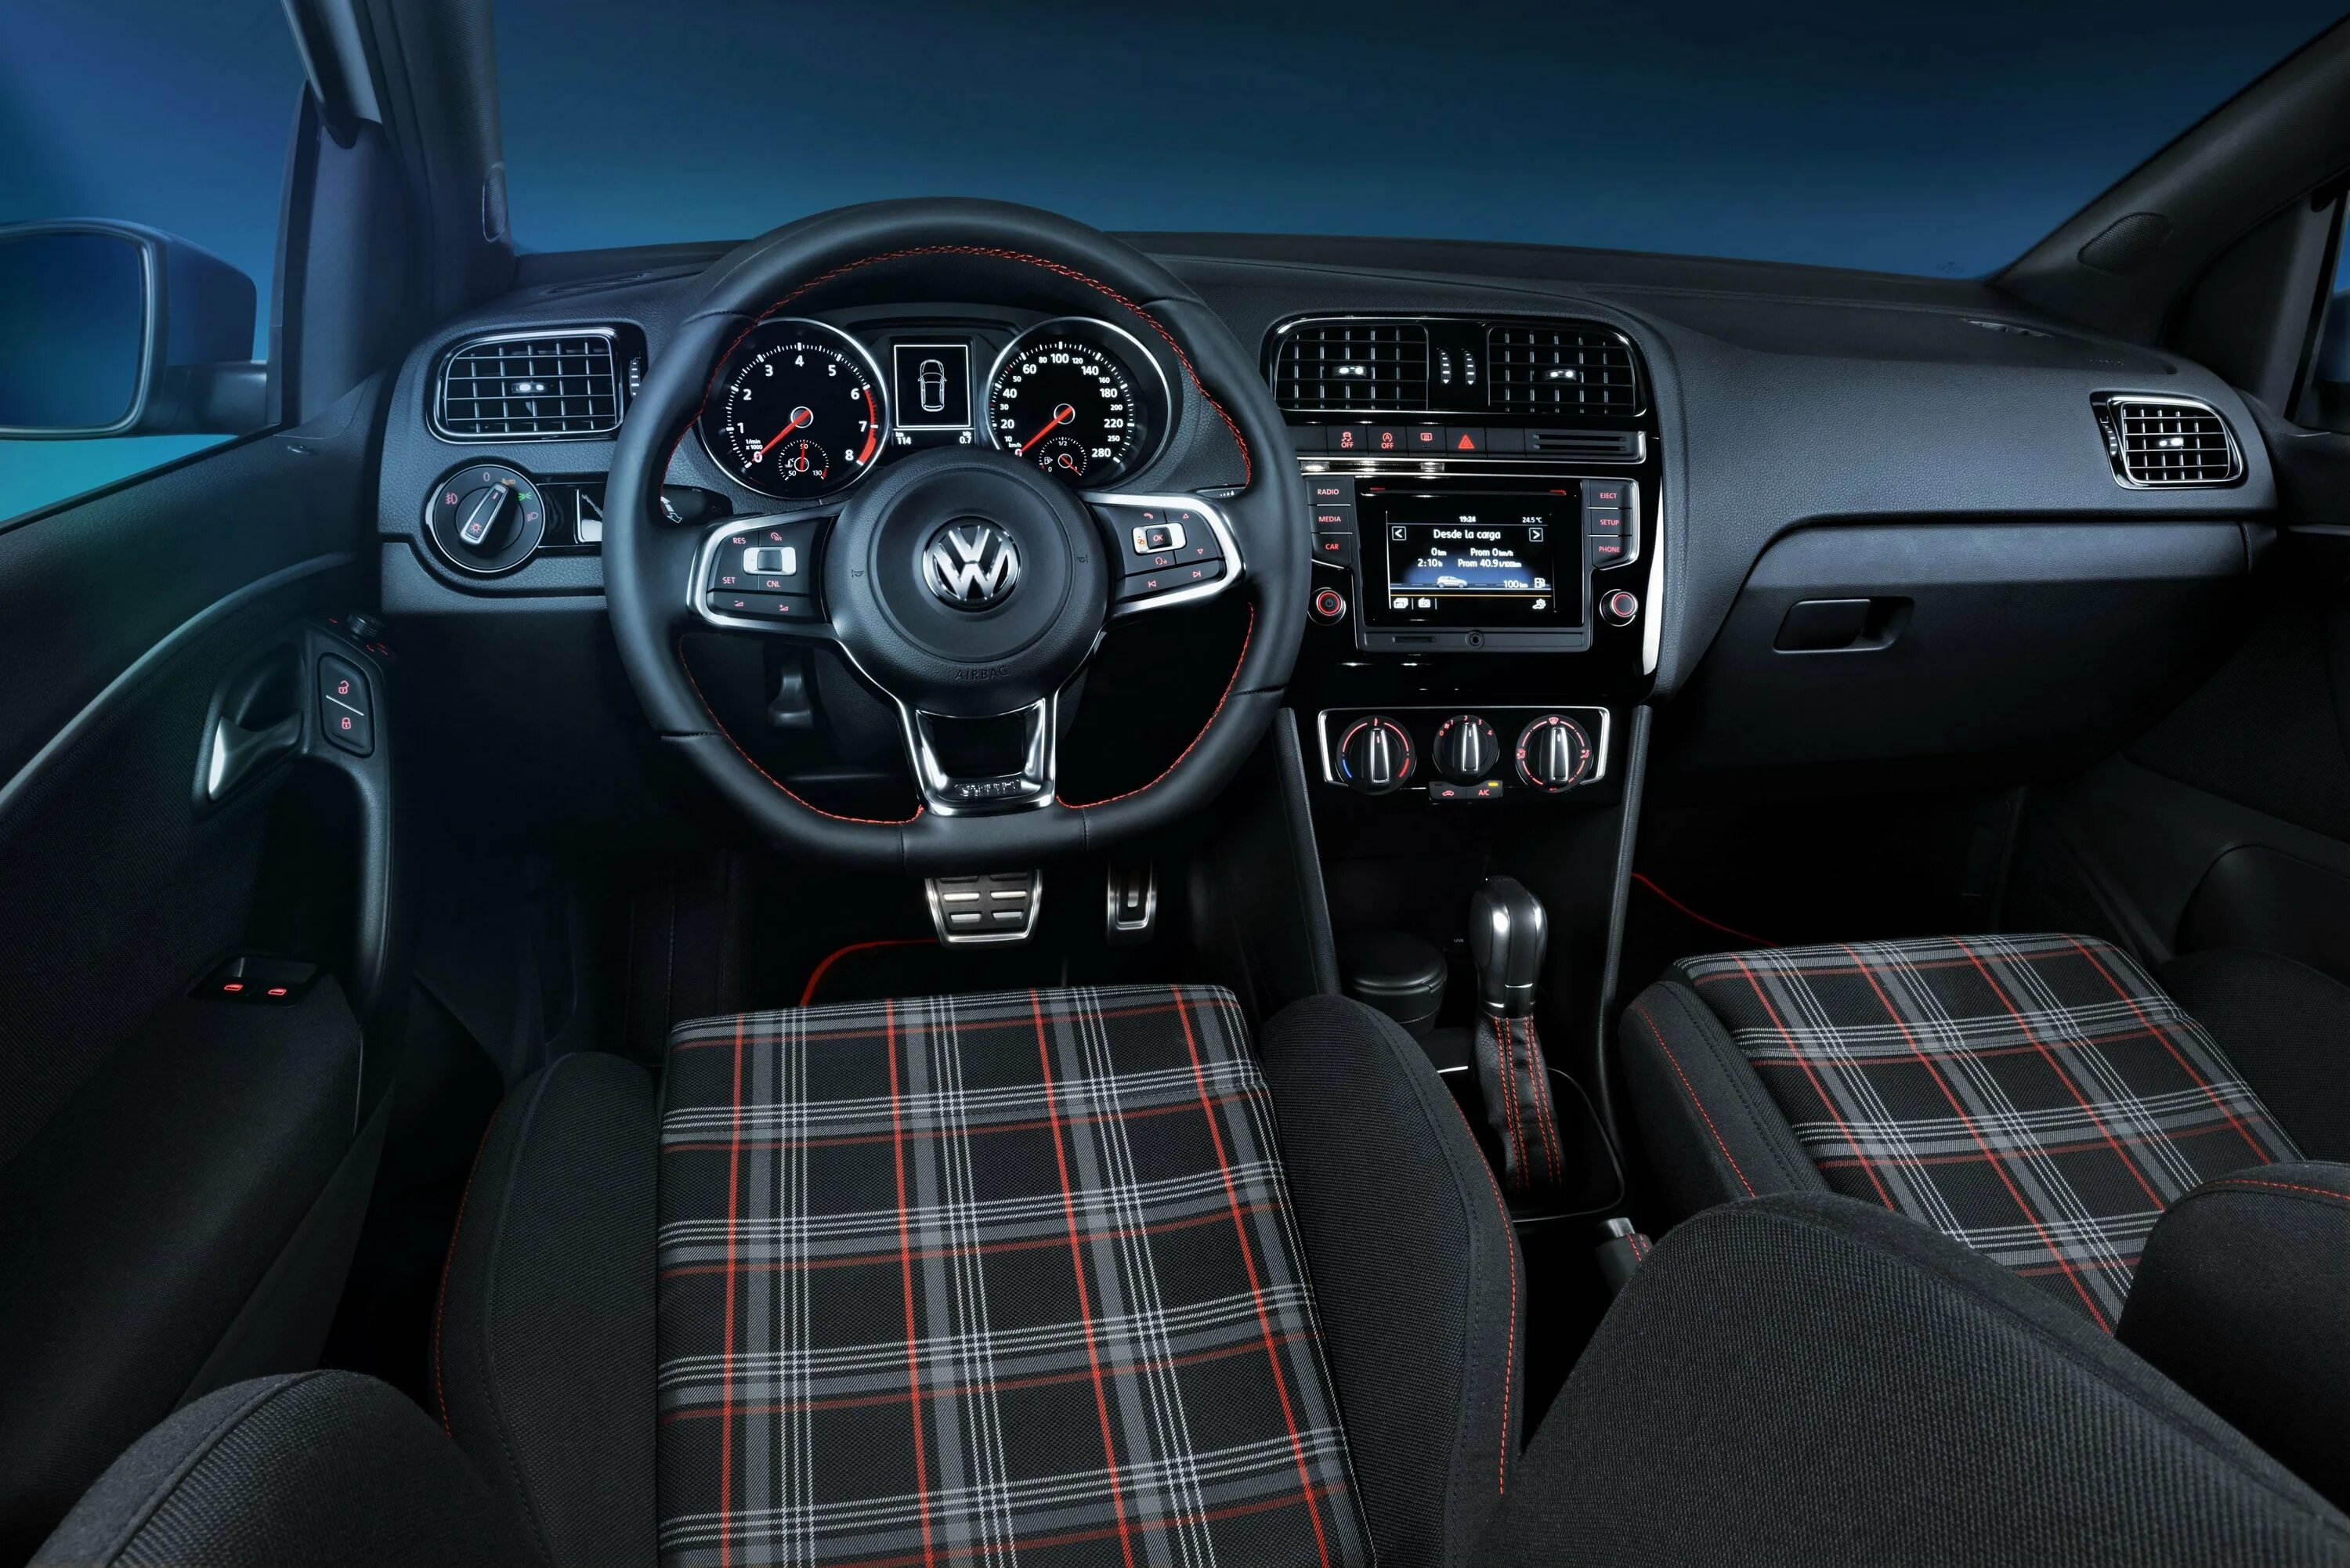 Торпеда фольксваген поло. Торпеда Фольксваген поло 2016. VW Polo GTI 2016. VW Polo GTI 6c. VW Polo GTI салон.